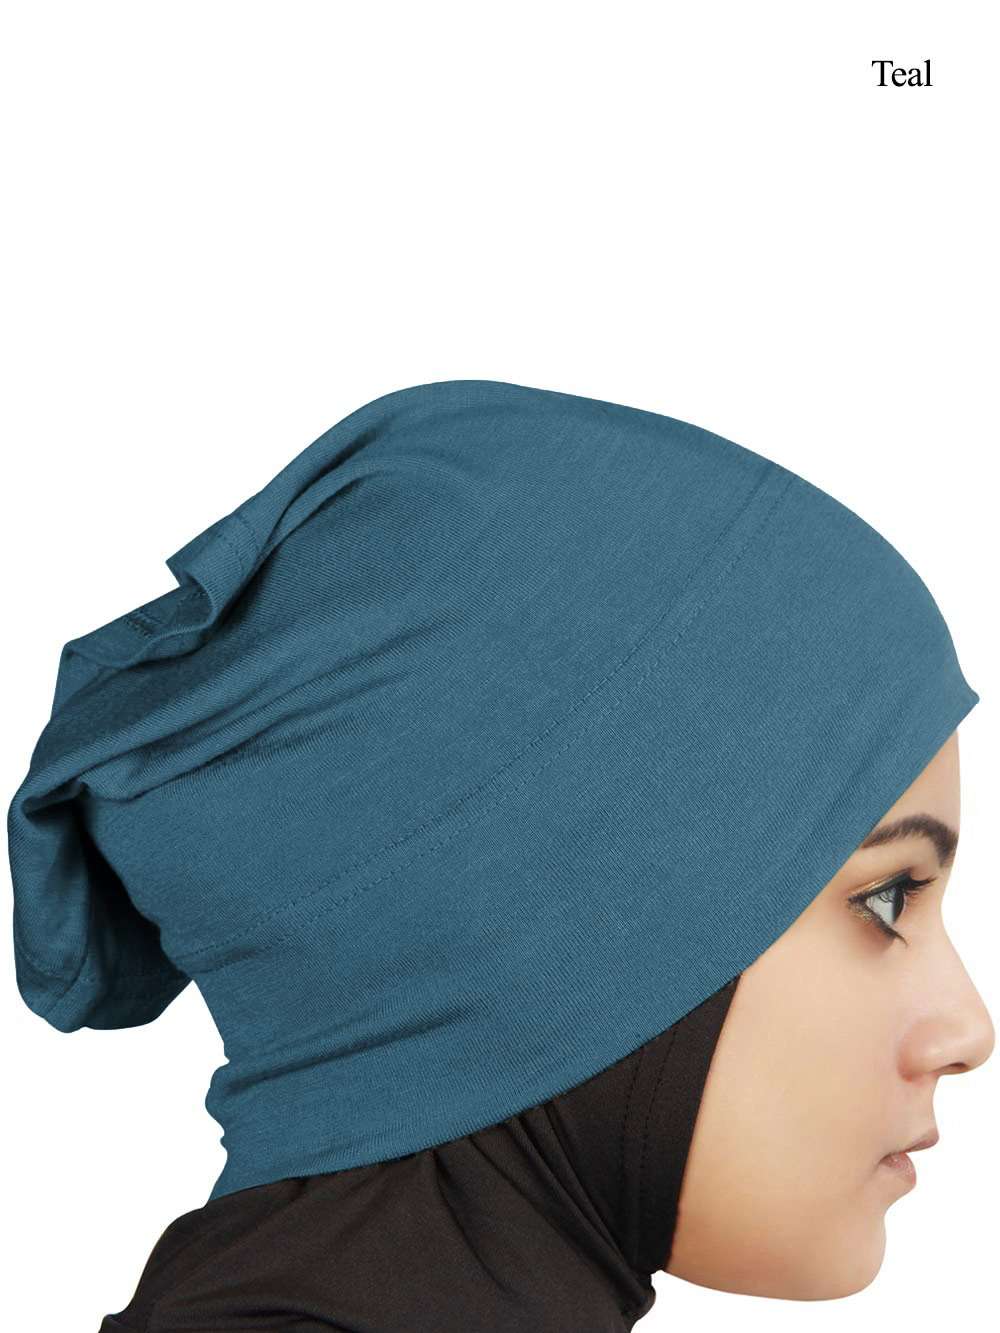 Viscose Jersey Under Hijab Cap / Headband